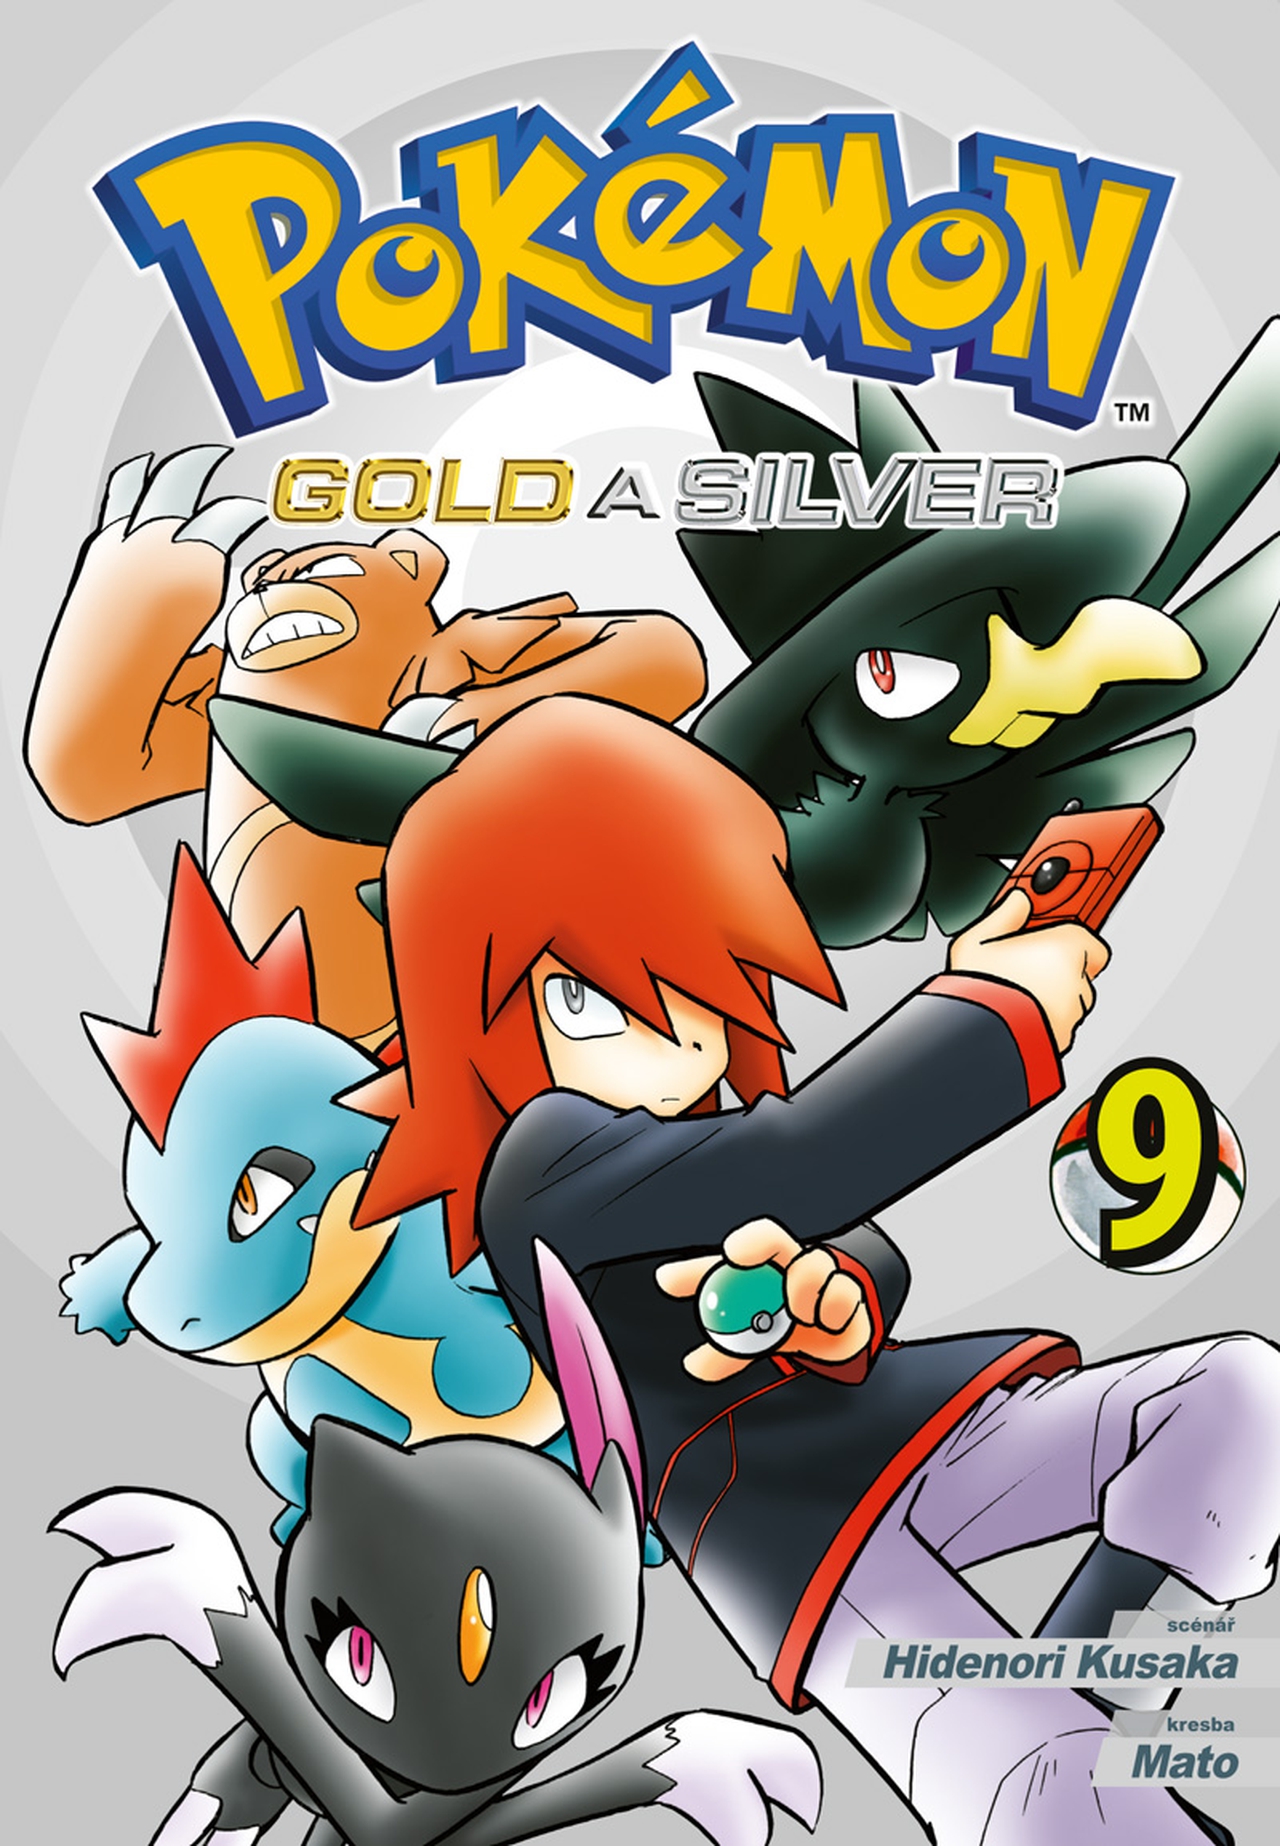 Pokémon 09 (Gold a Silver) [Kusaka Hidenori]